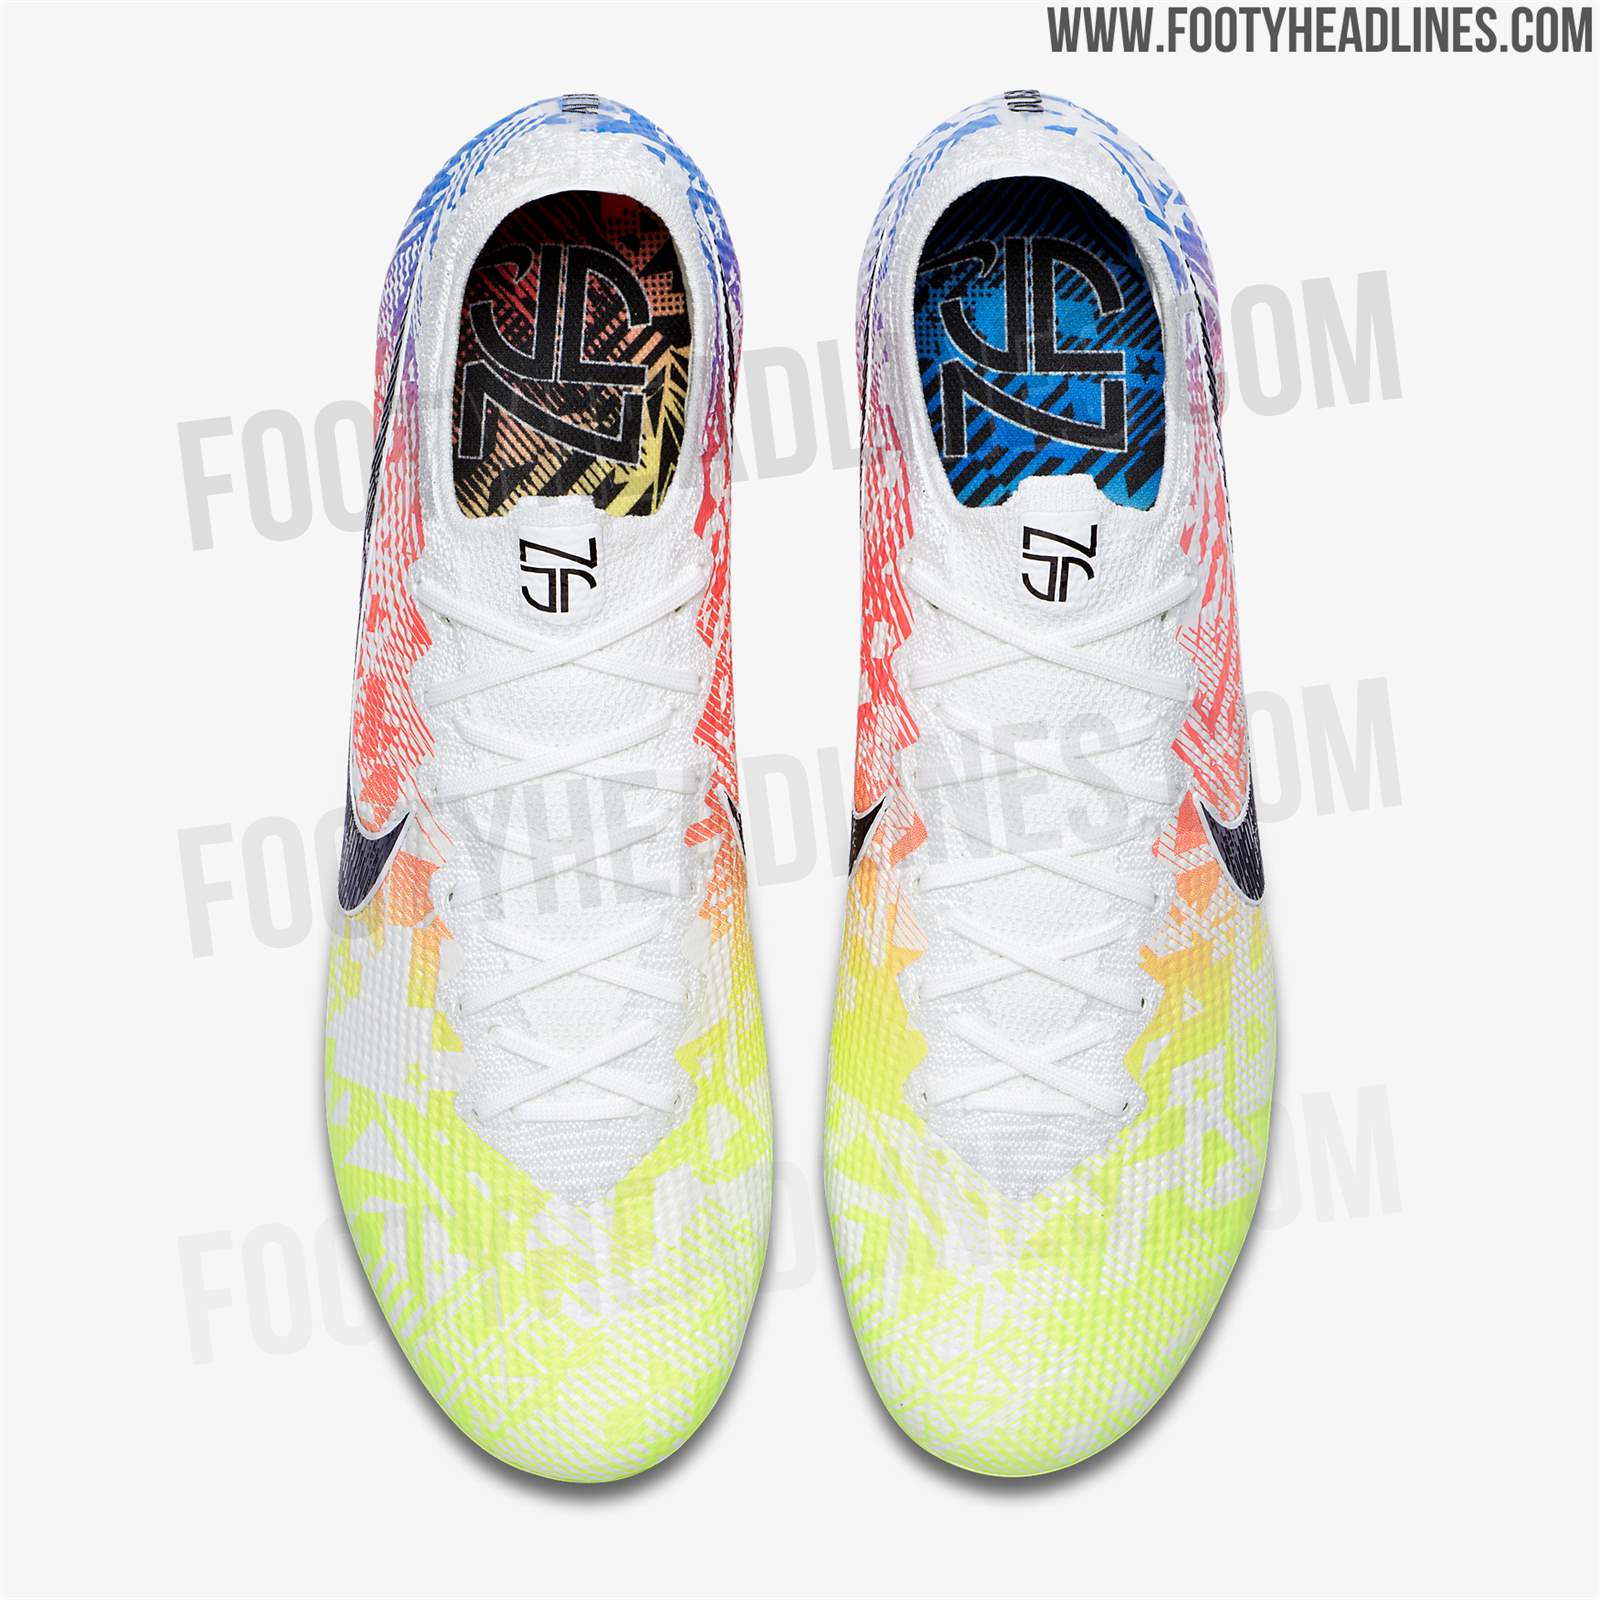 Nike Mercurial Neymar Signature Boots - Footy Headlines